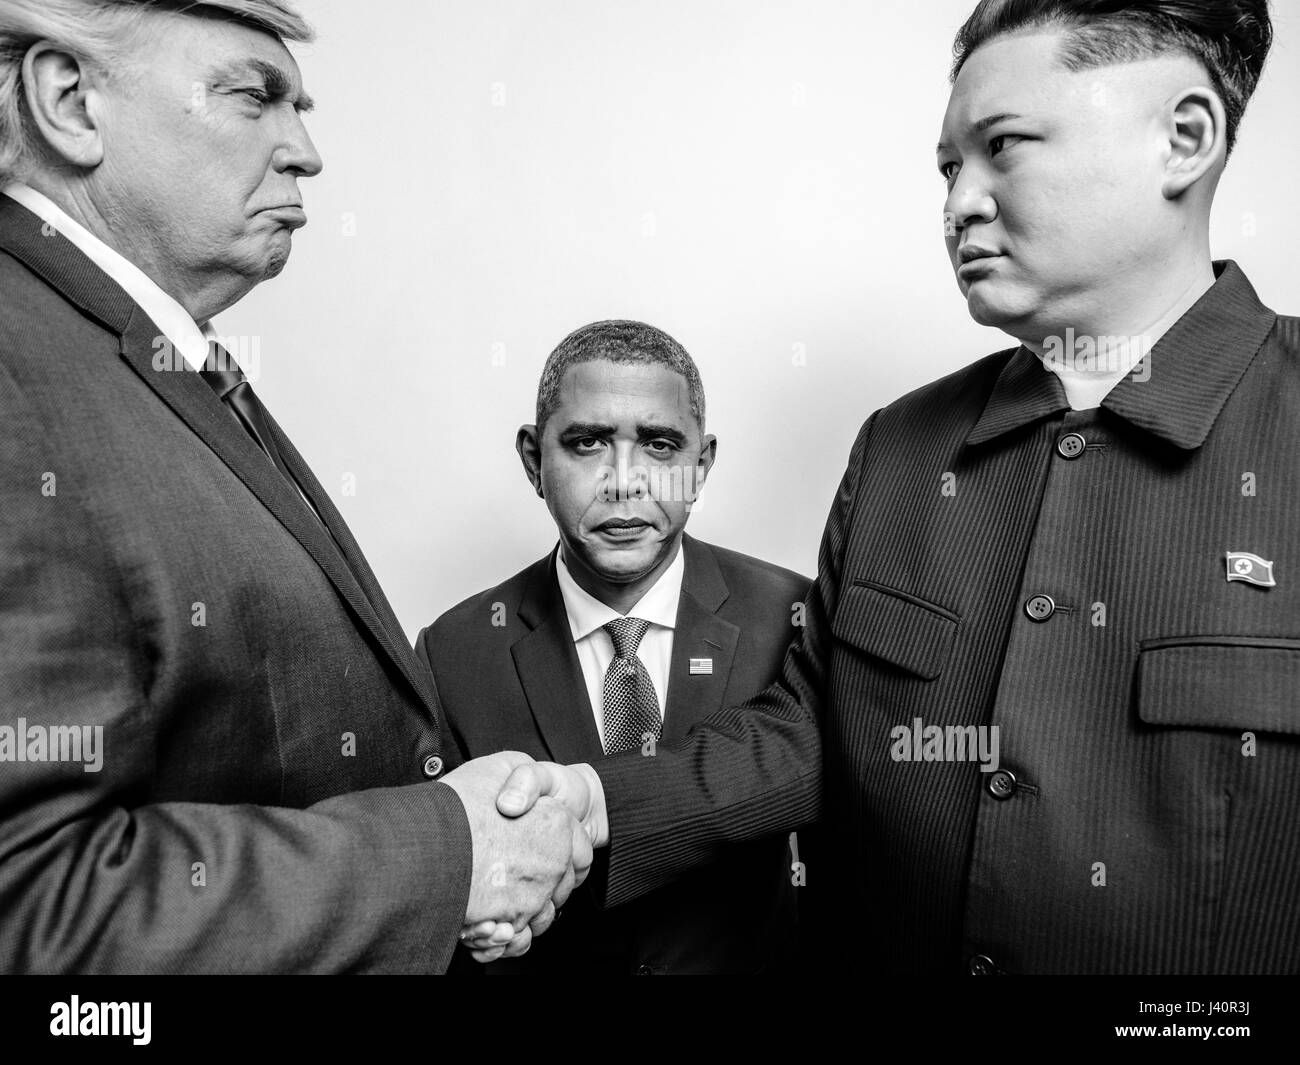 President Donald J Trump, President Barack Obama and Supreme Leader of North Korea Kim Jong-Un lookalikes meet for a photoshoot in Hong Kong. Stock Photo